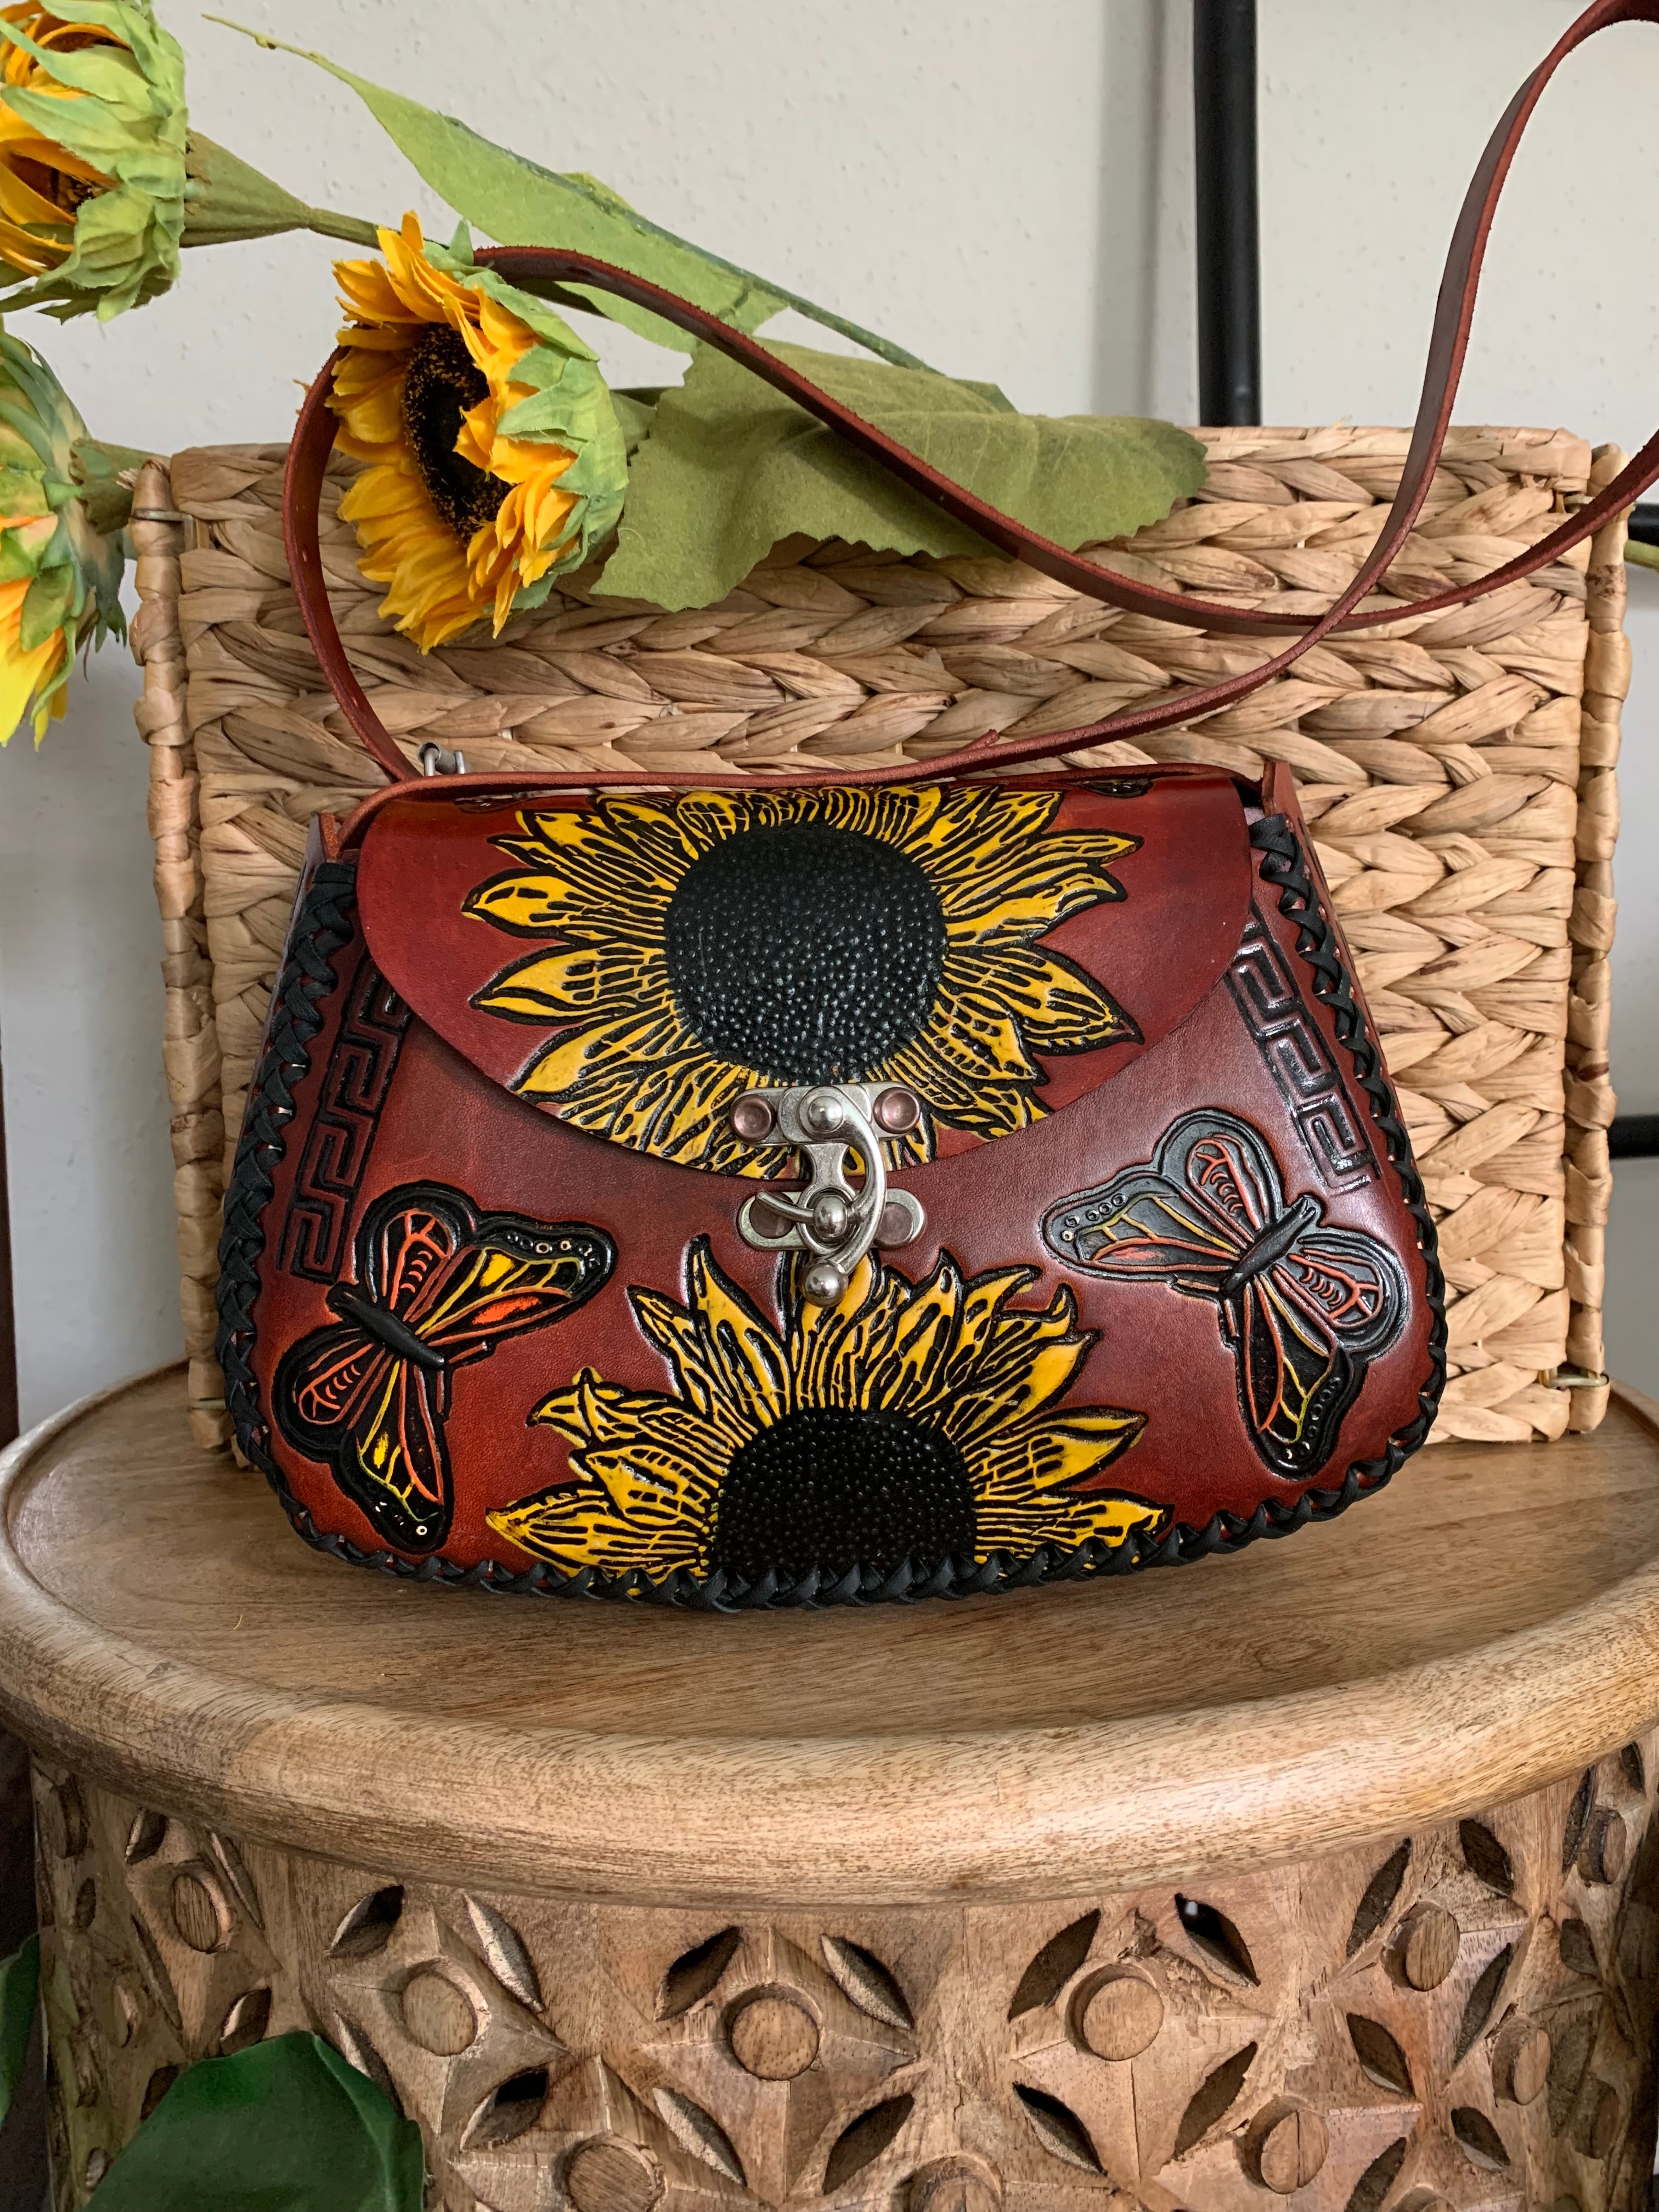 Sunflower Tooled Leather Handbag | Shop.PBS.org